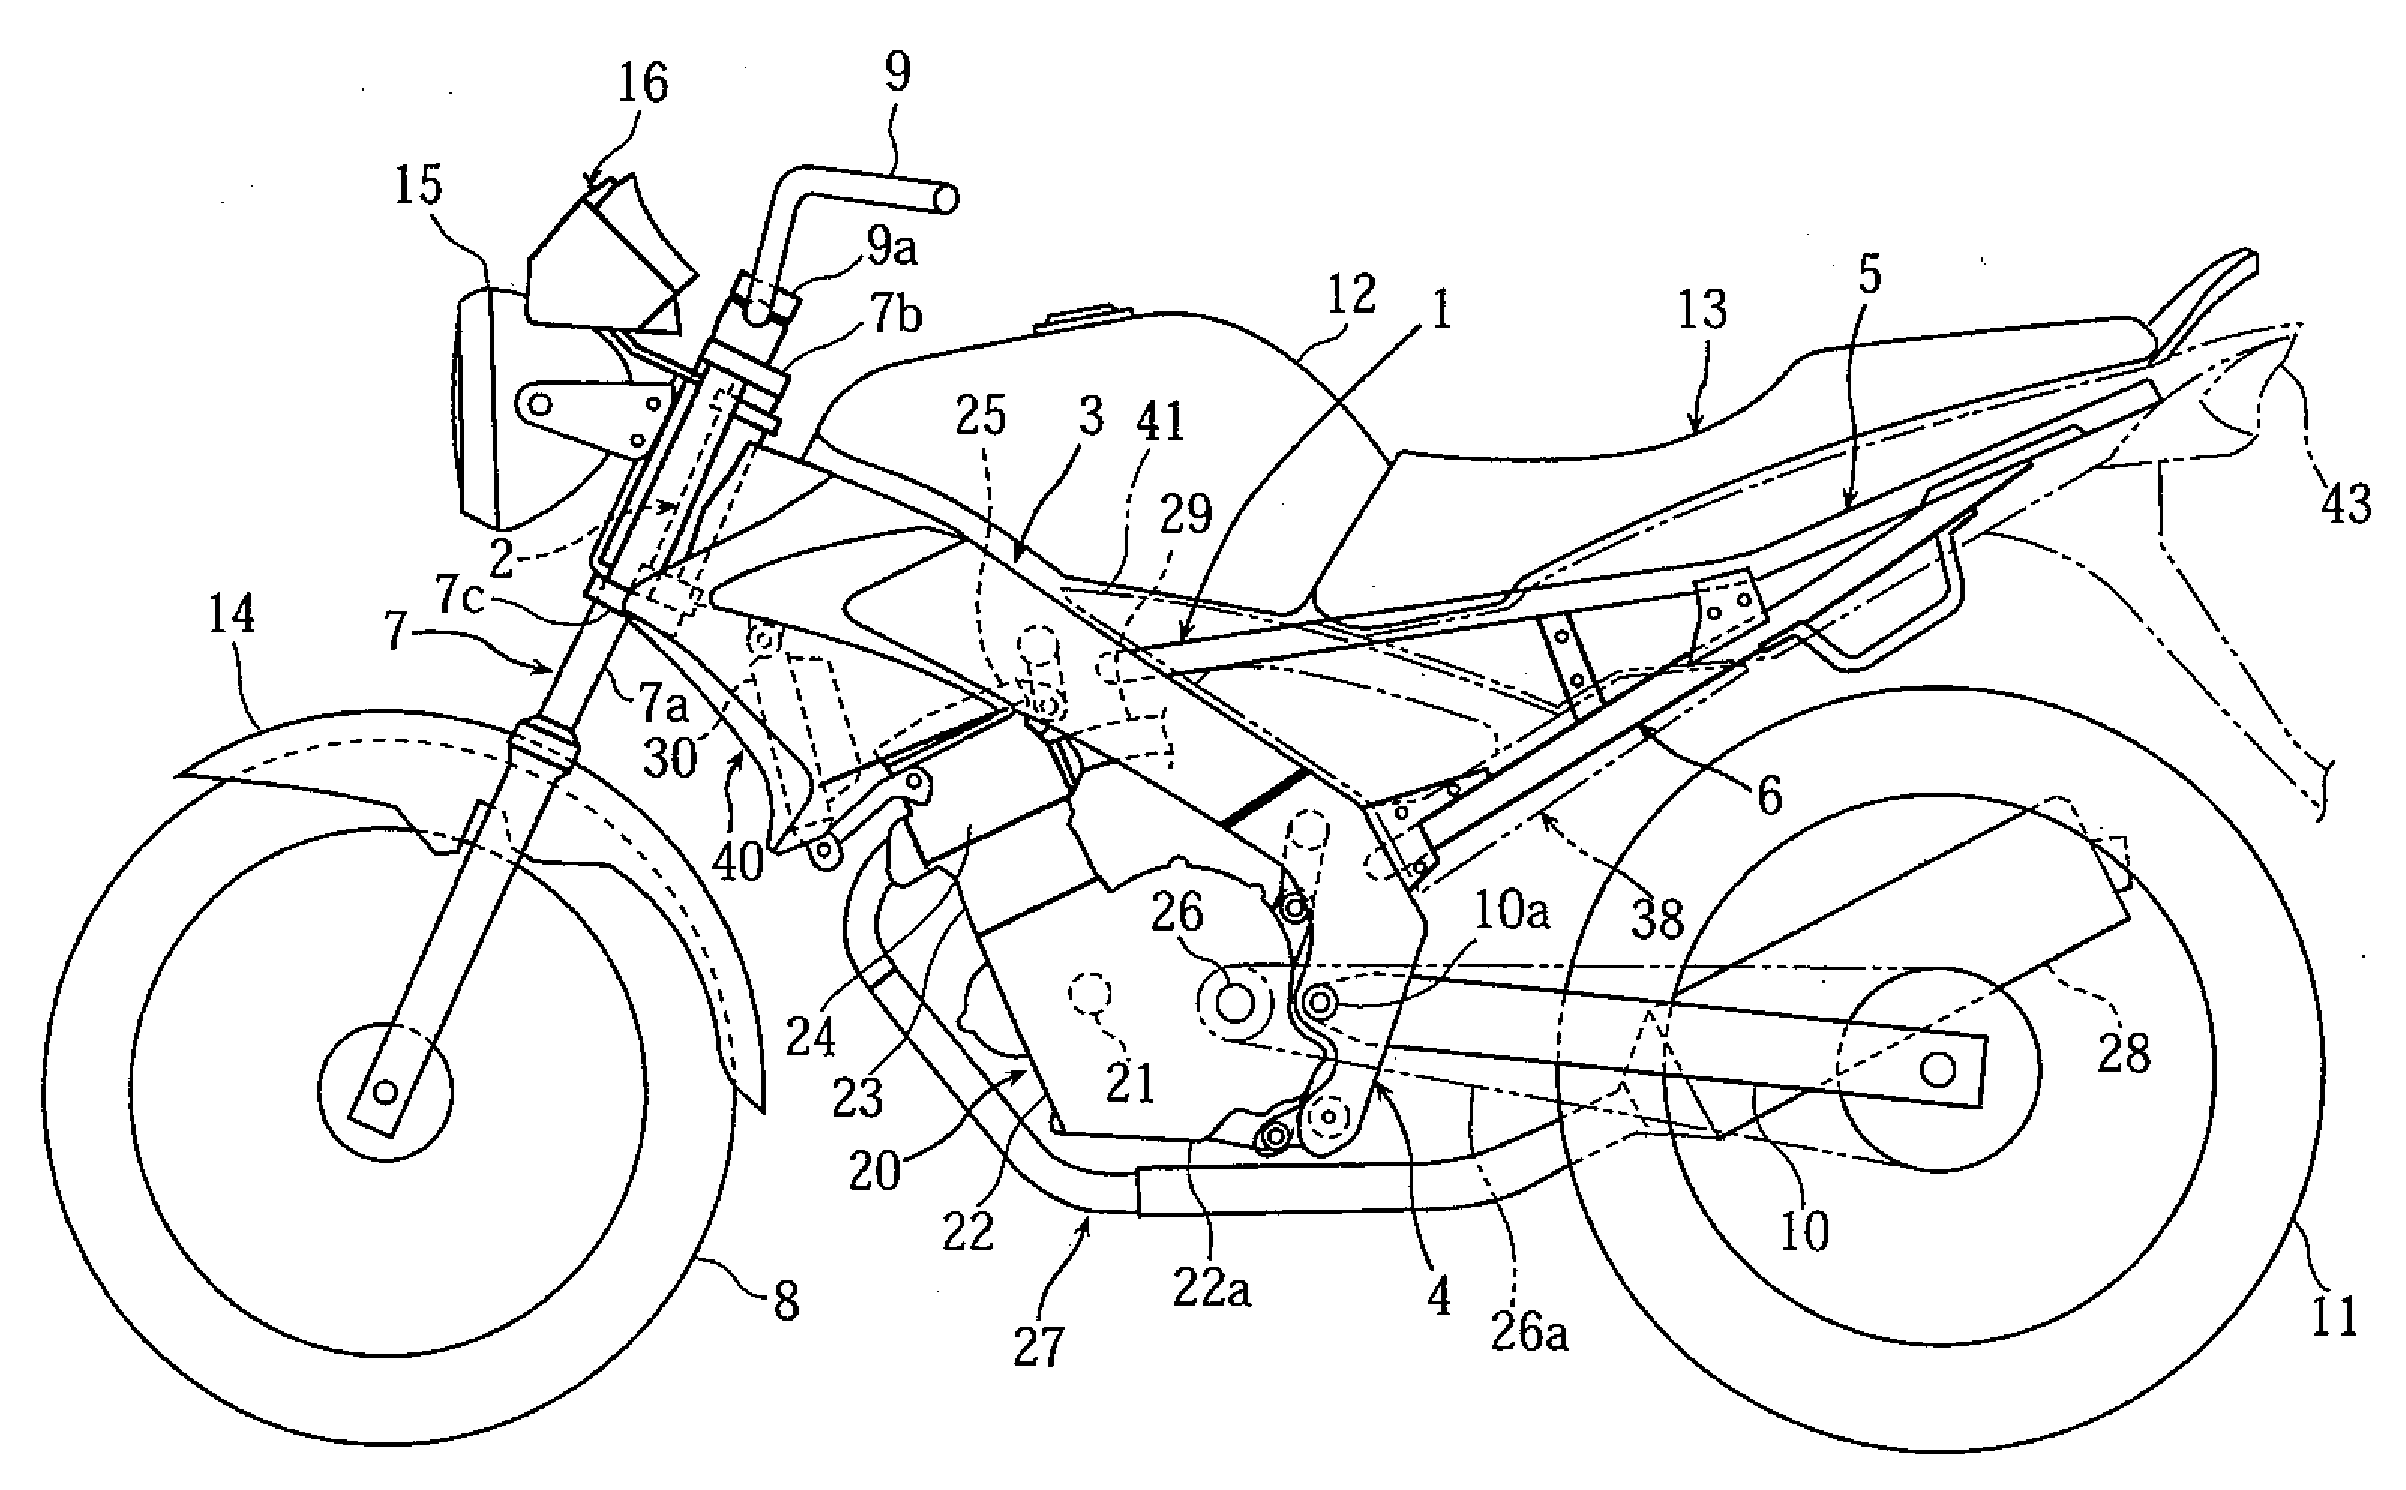 Meter Device of Motorcycle